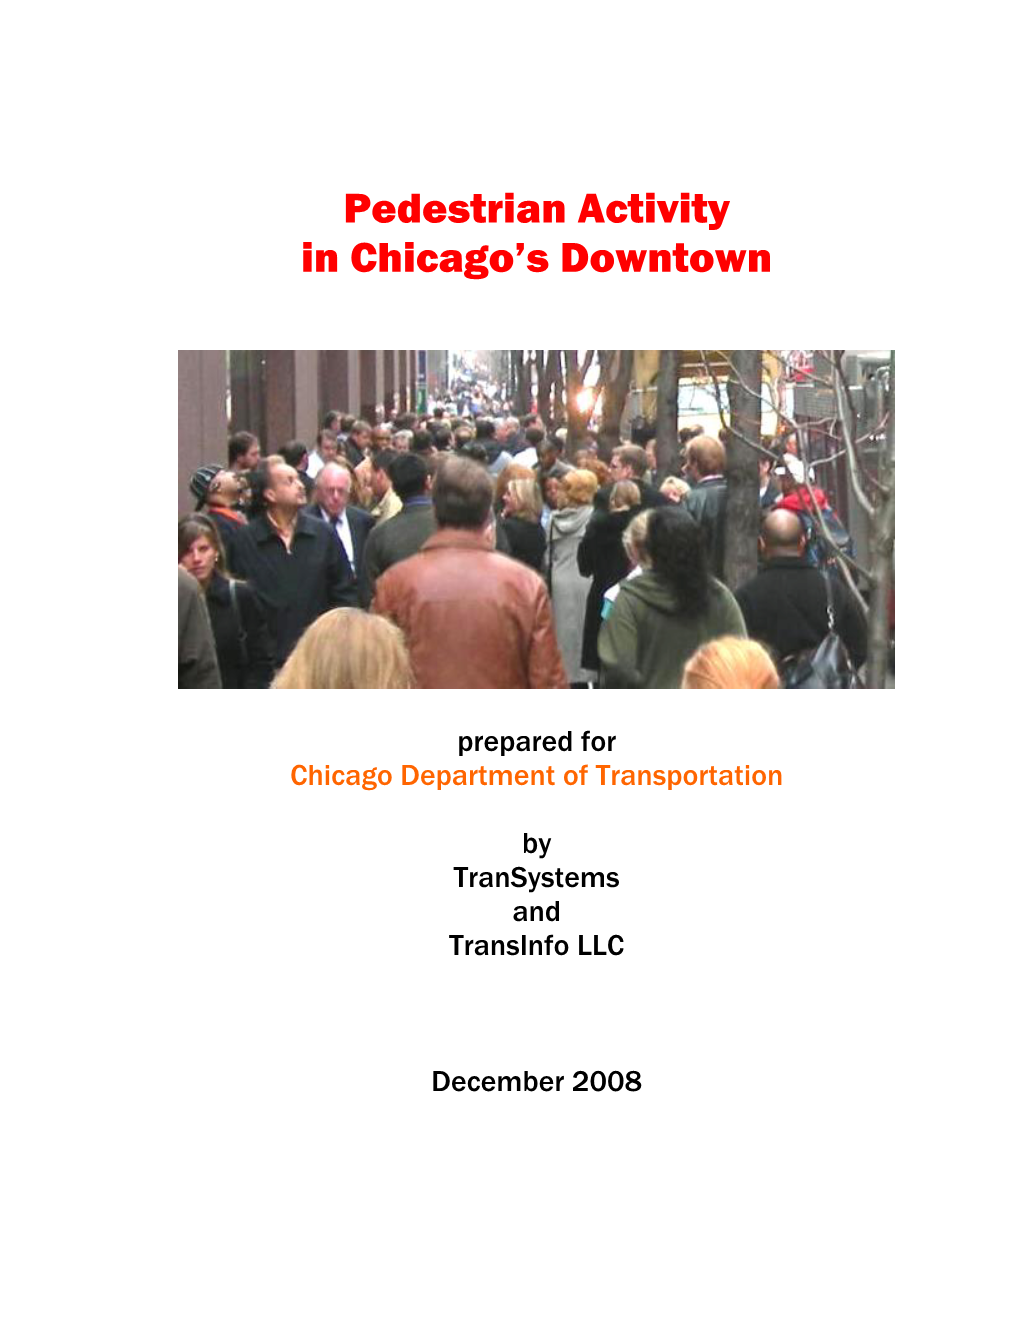 Downtown Pedestrian Count